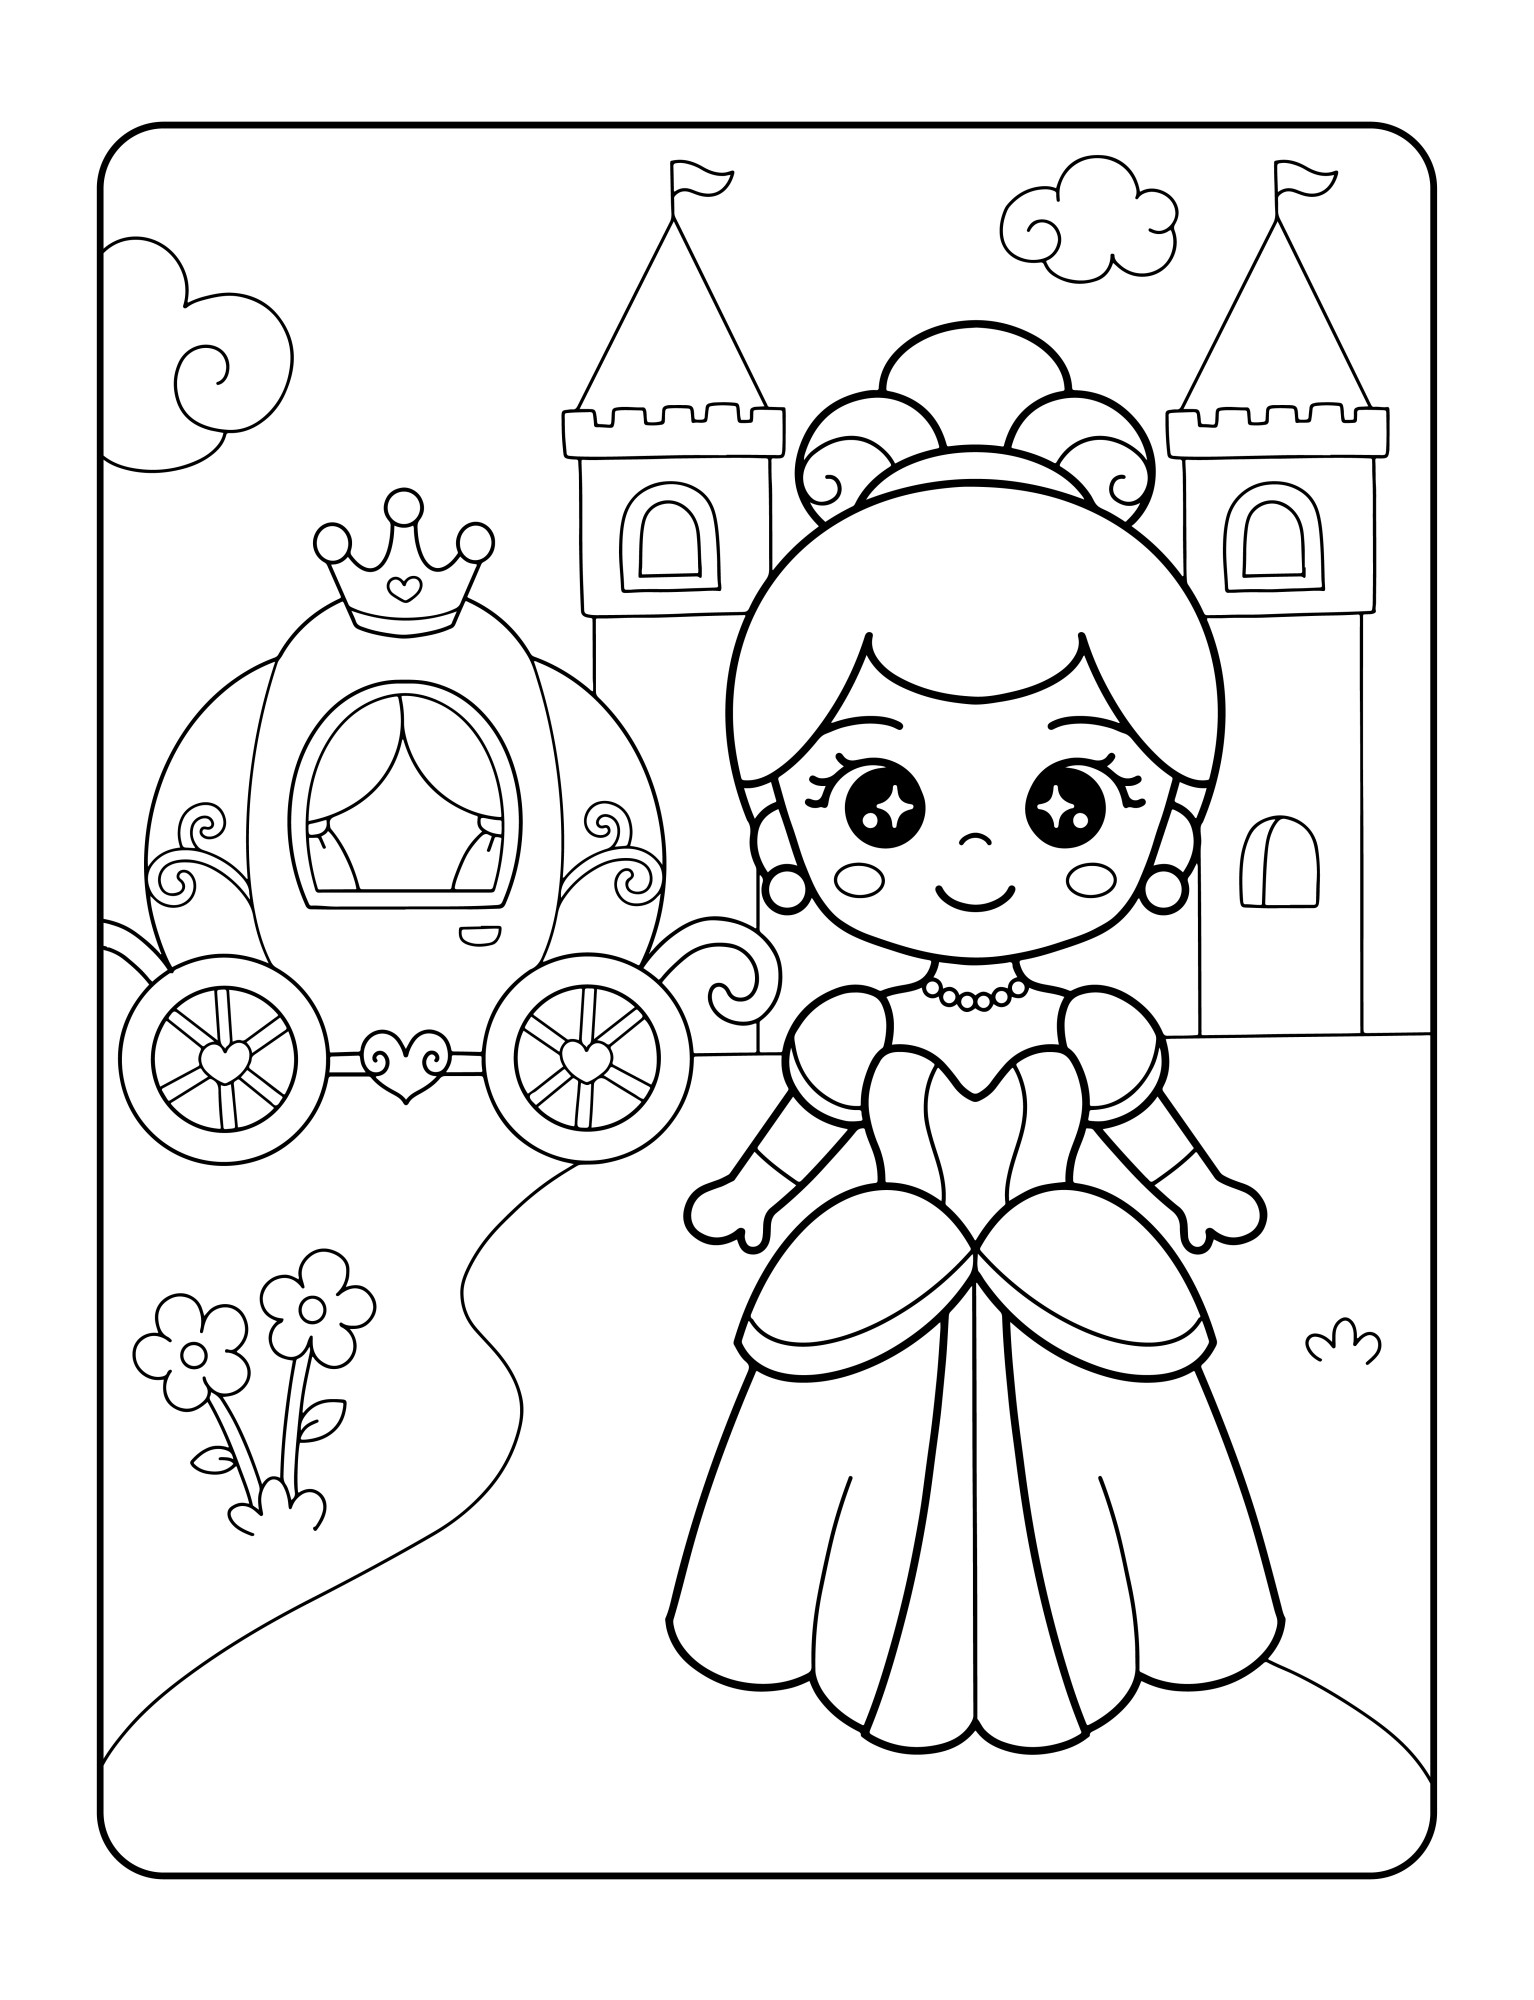 Раскраска для детей: принцесса Золушка рядом с каретой на фоне замка